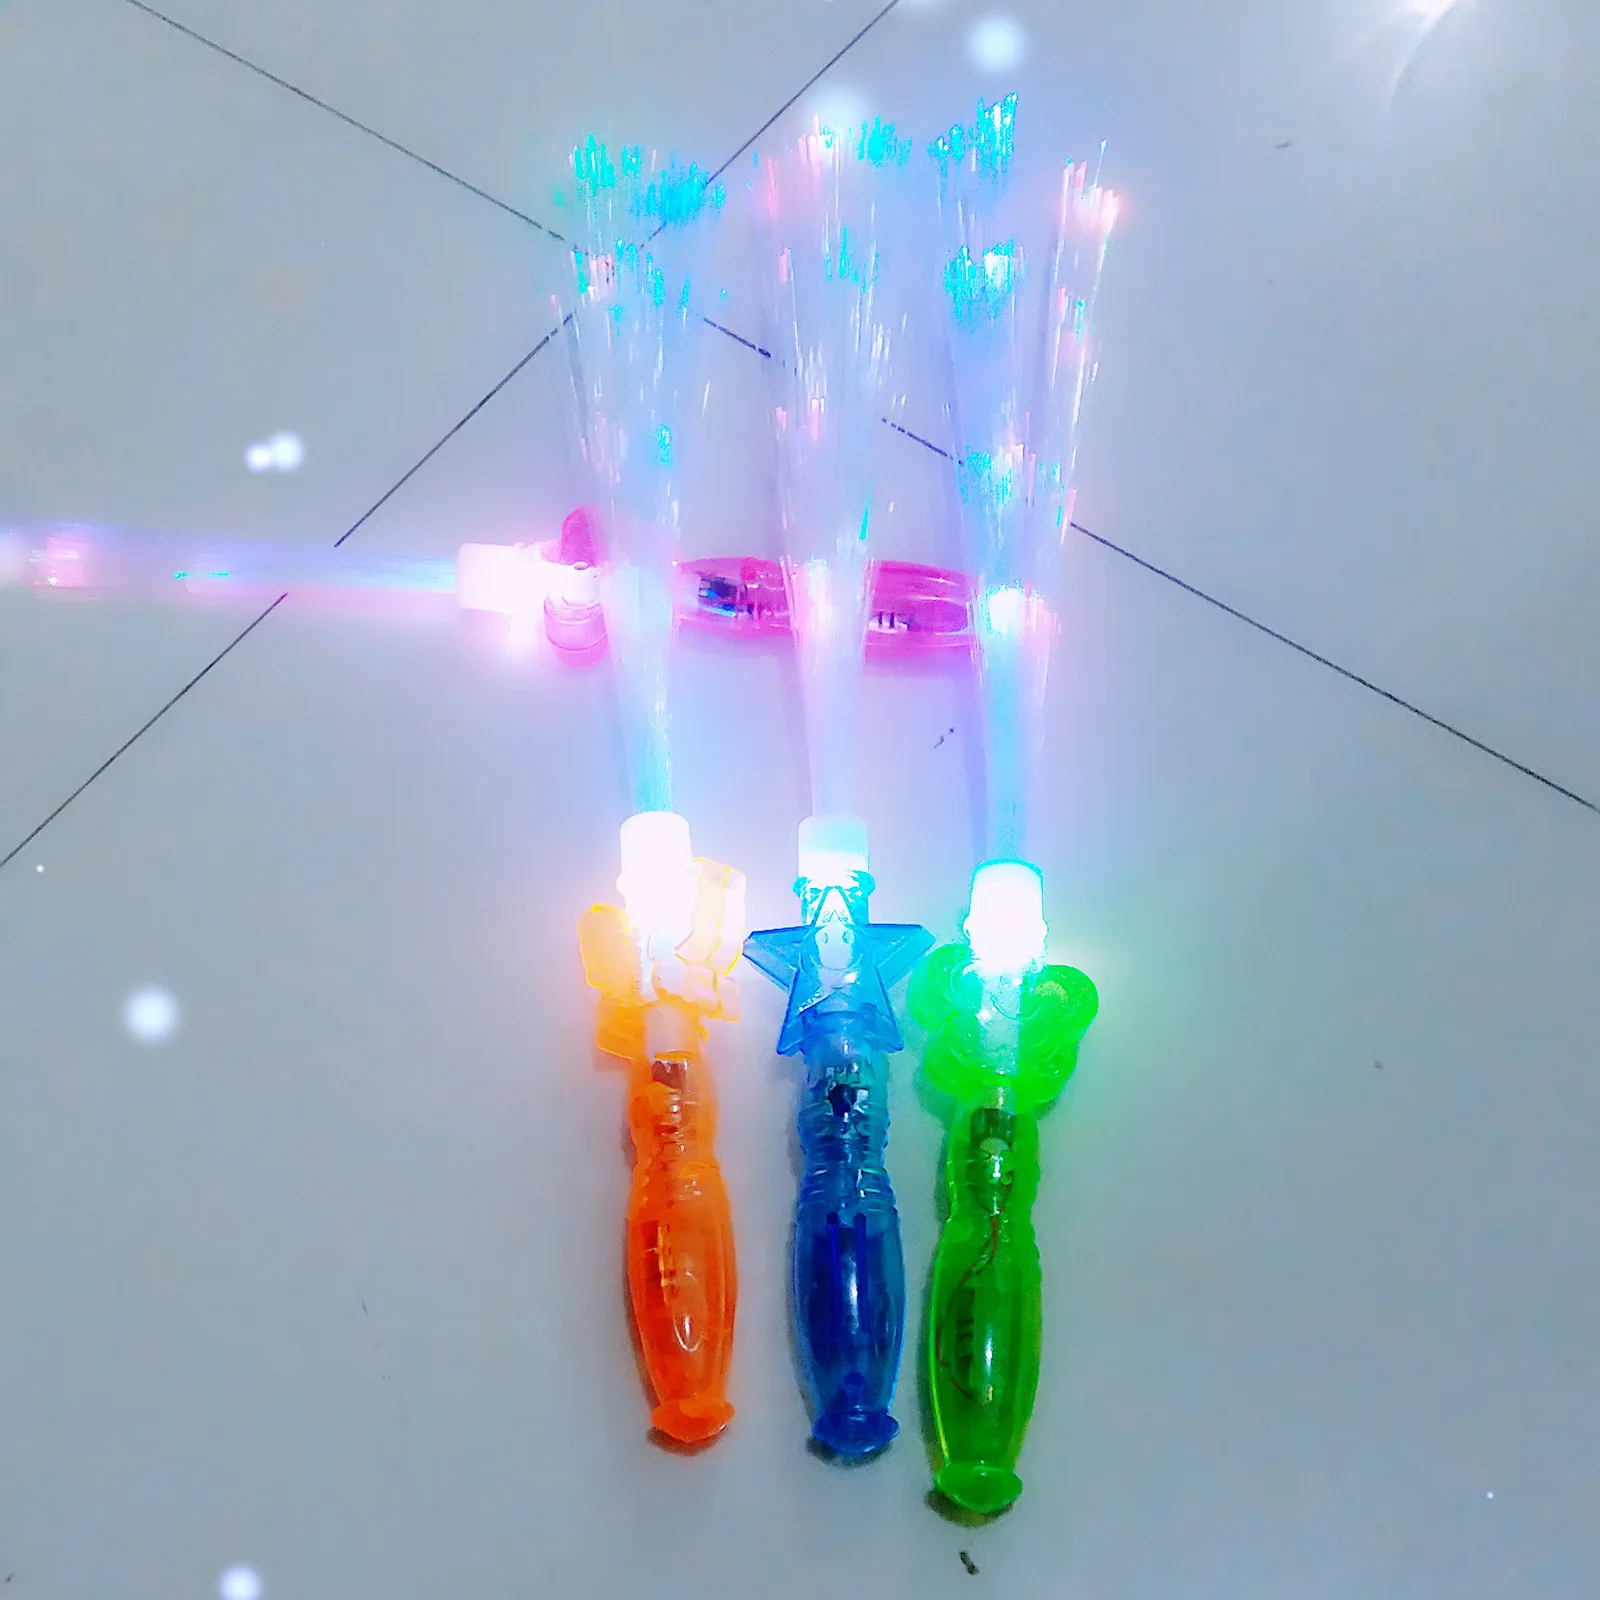 

20pcs LED Flashing Light Up Stick Multi Color Glow Wand Neon Party Concert Blinking Optic Fiber Birthday Gift Wedding Halloween